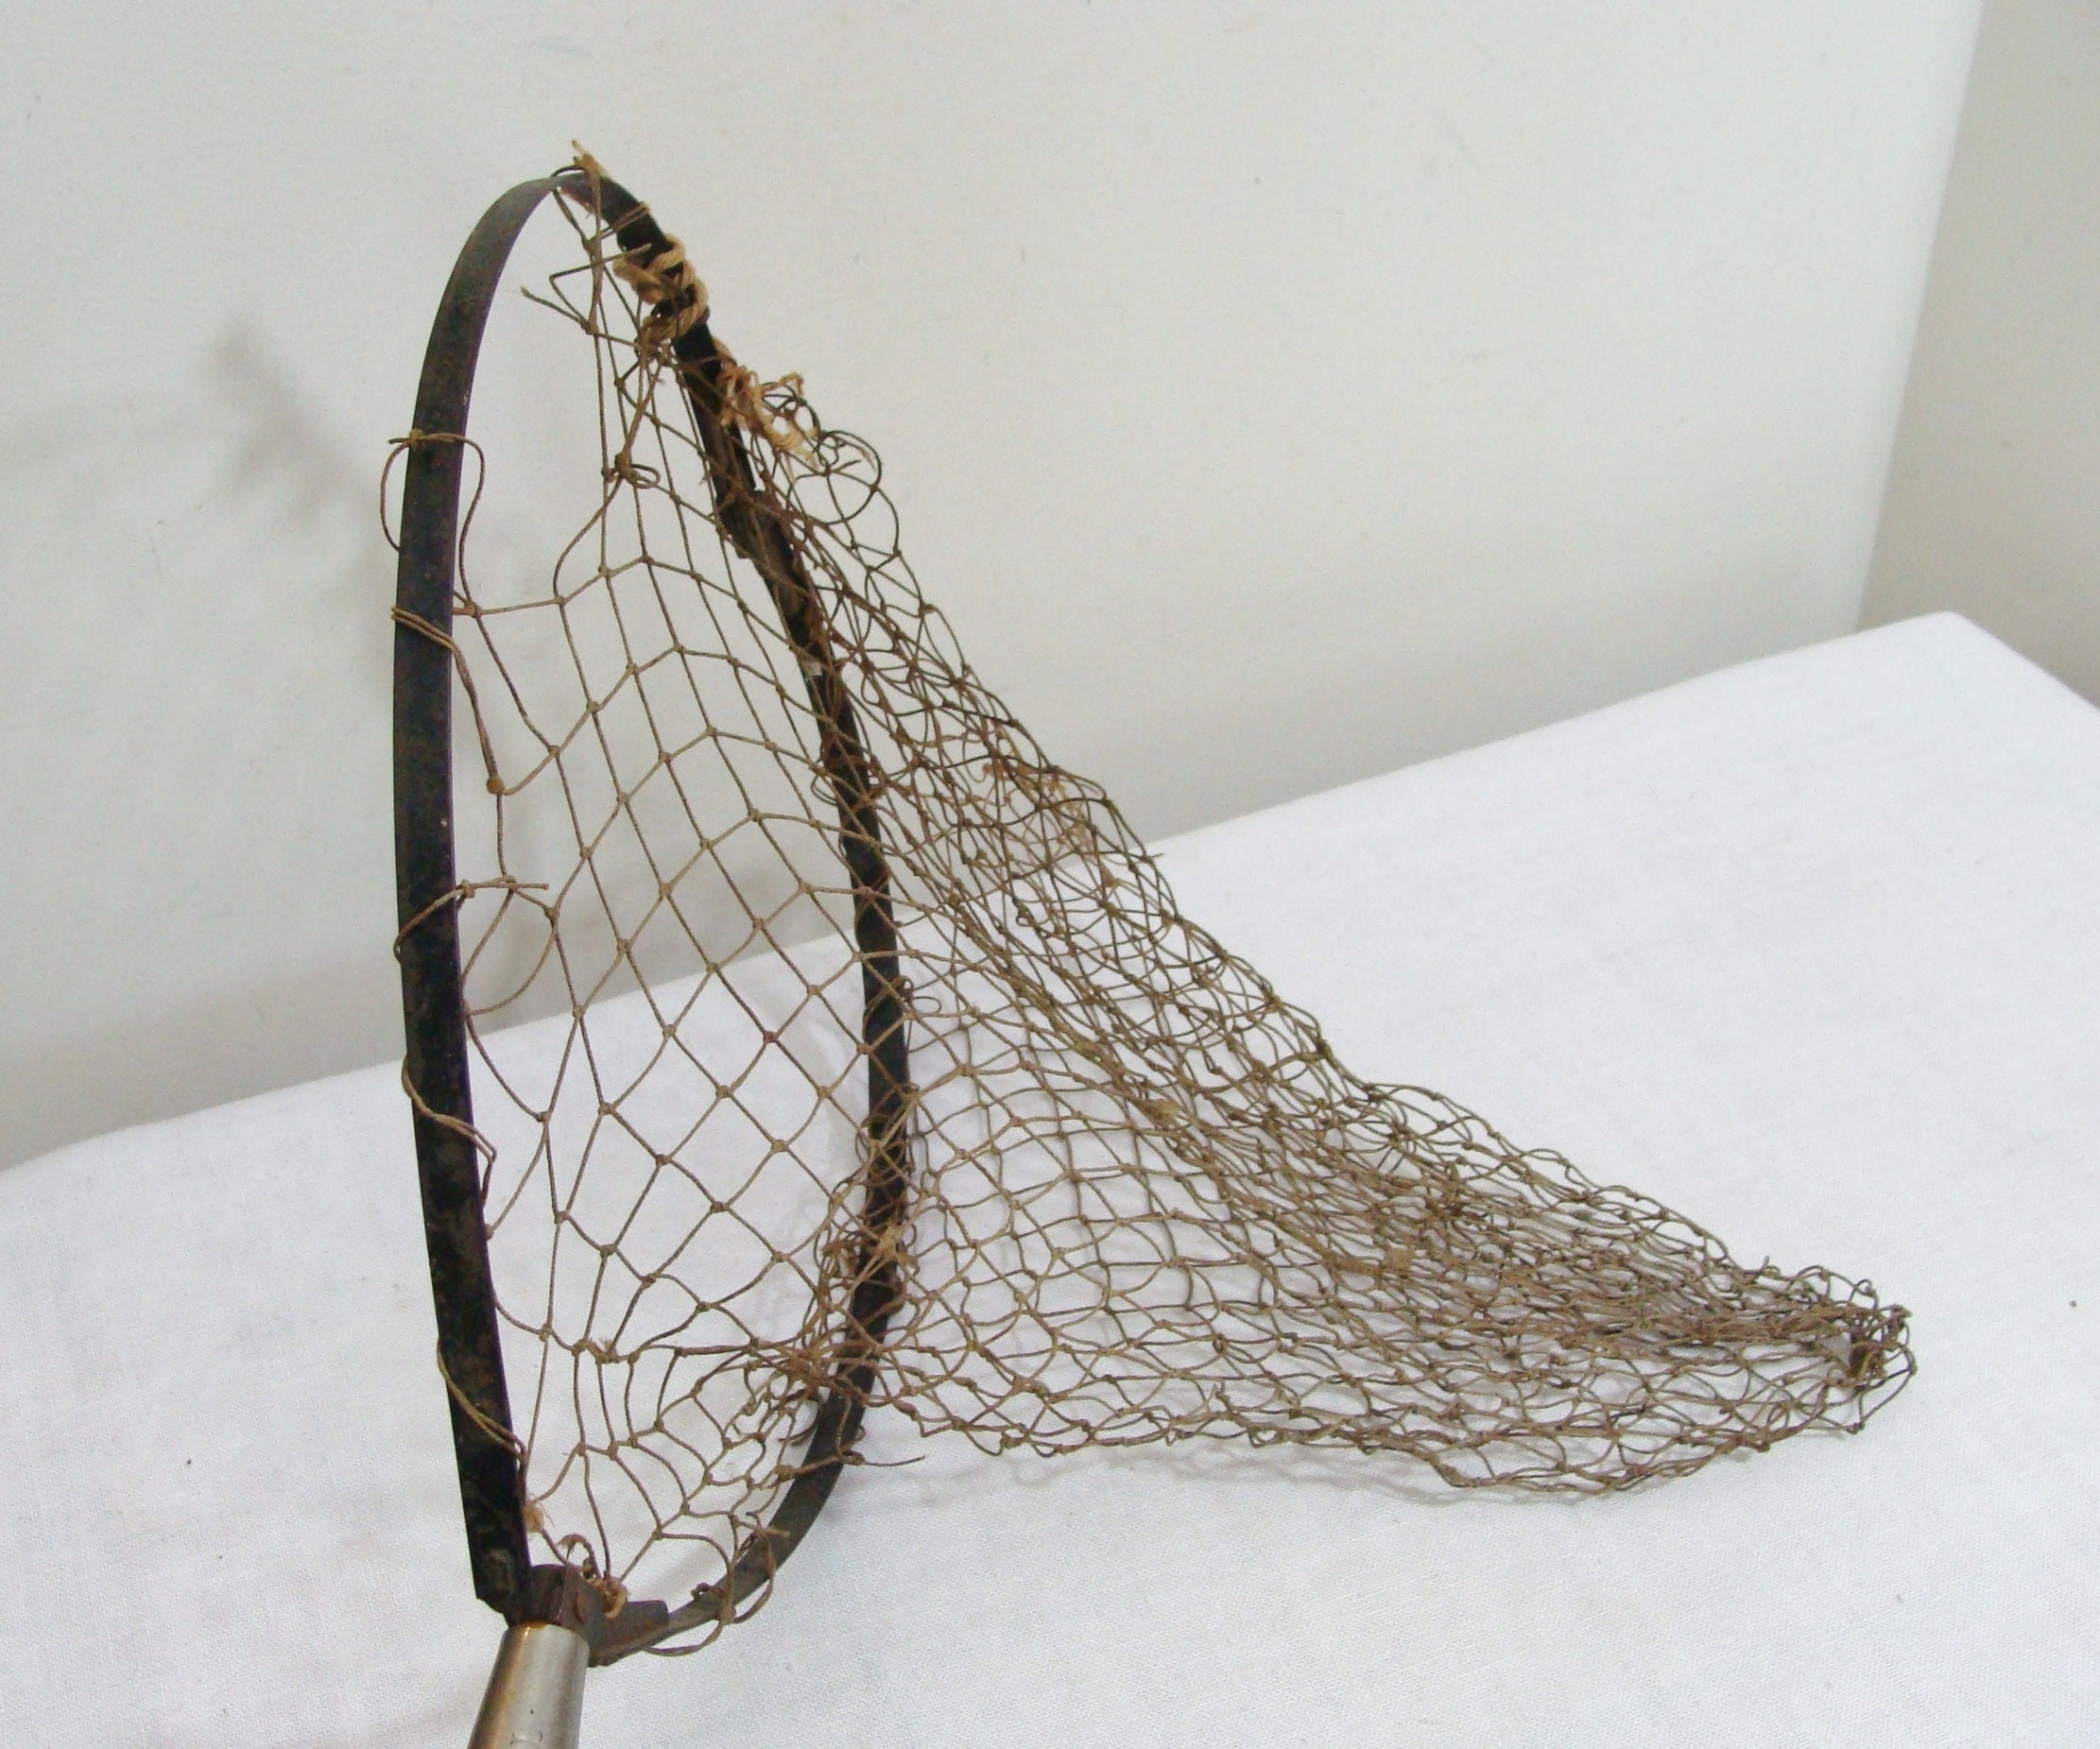 Vintage Antique Metal Ring Fishing Net Bamboo Handle 